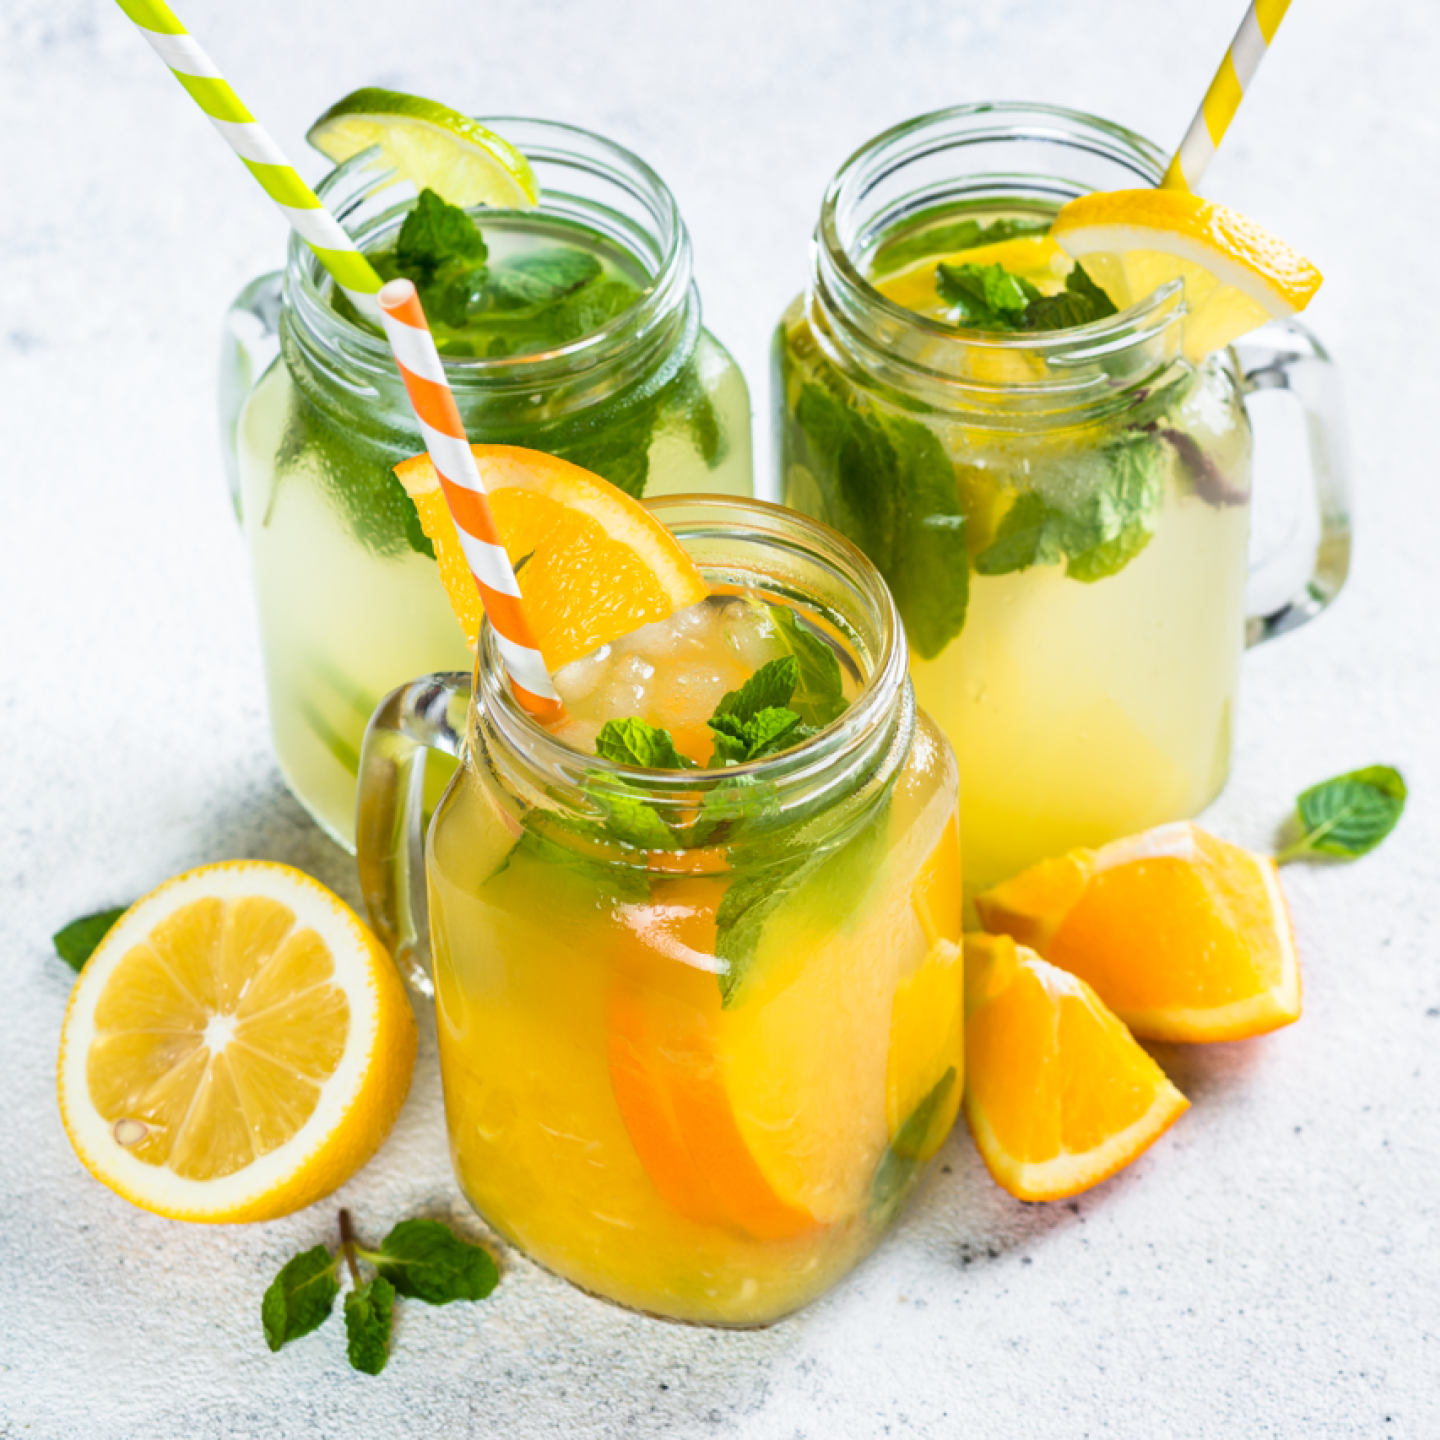 lemonade mojito and orange lemonade on white 2021 08 26 18 07 29 utc groot